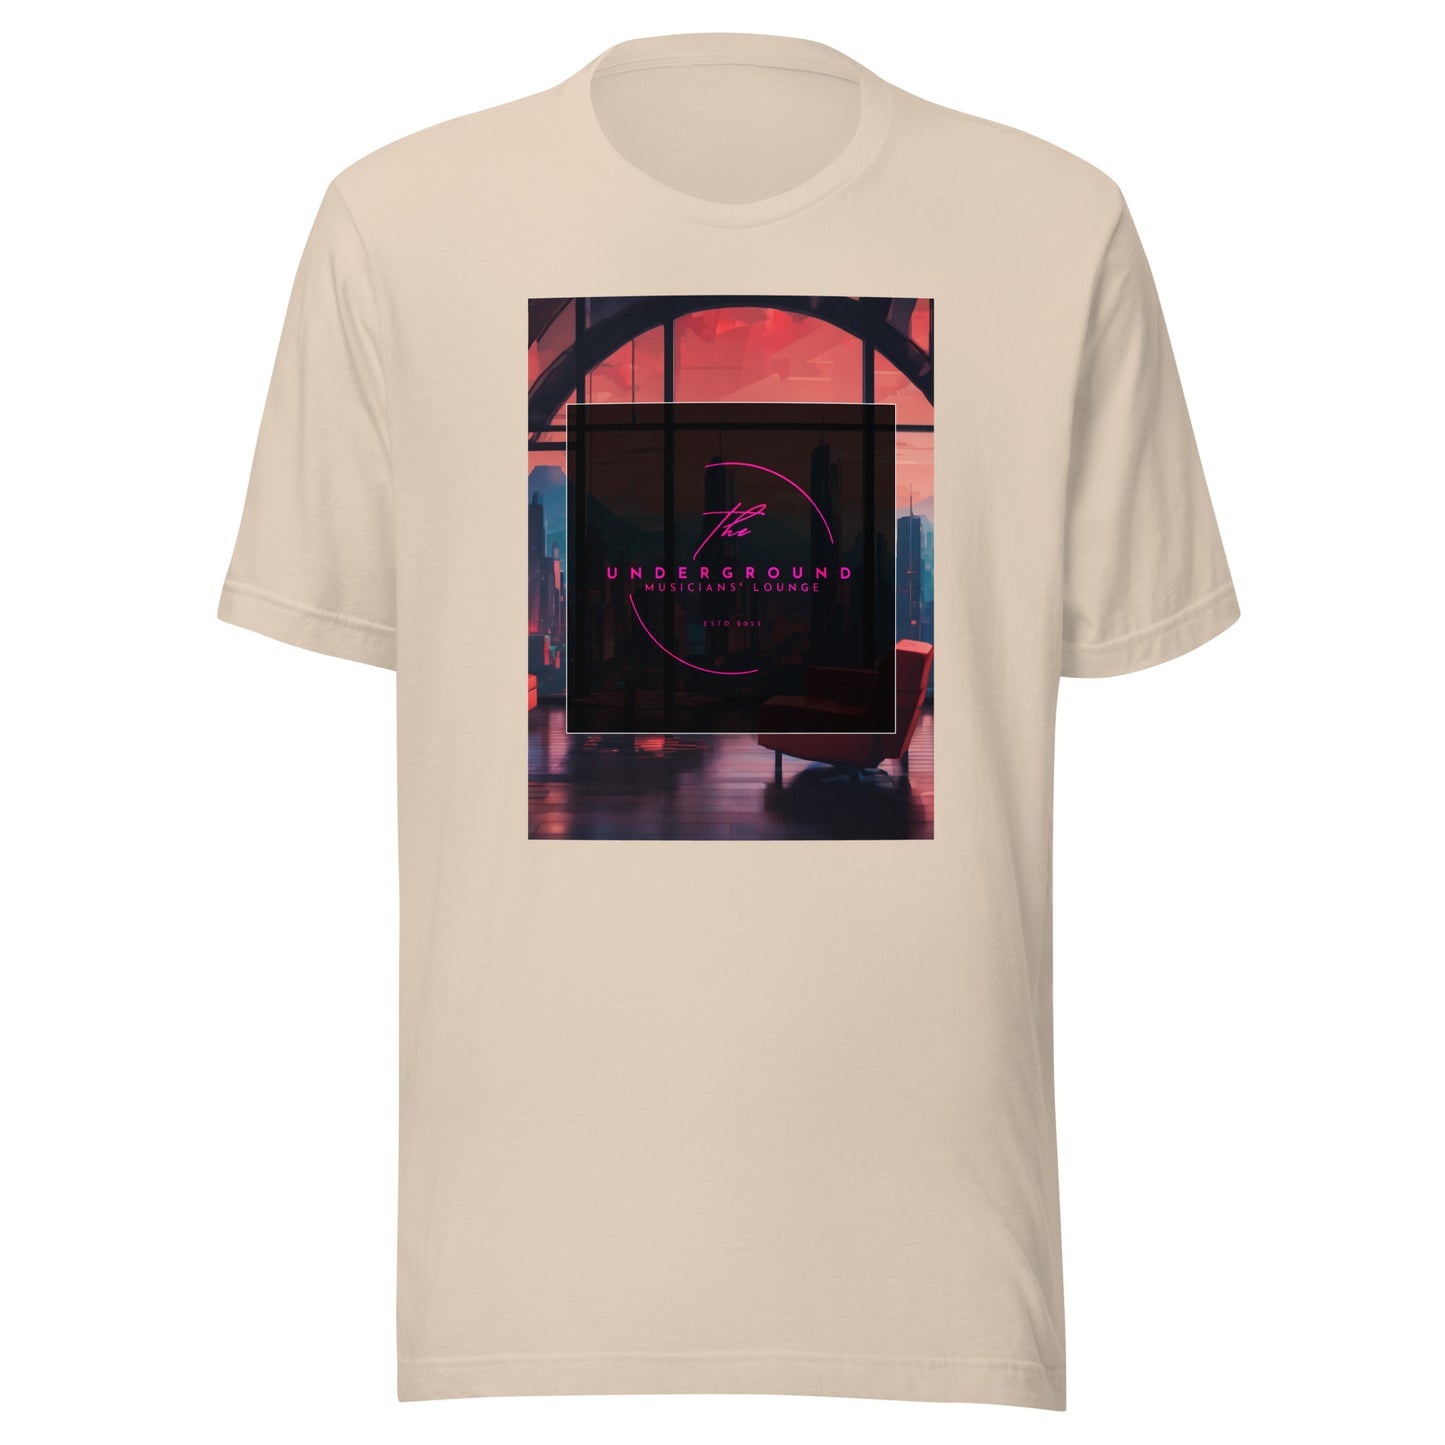 The Underground Musician's Lounge T-Shirt